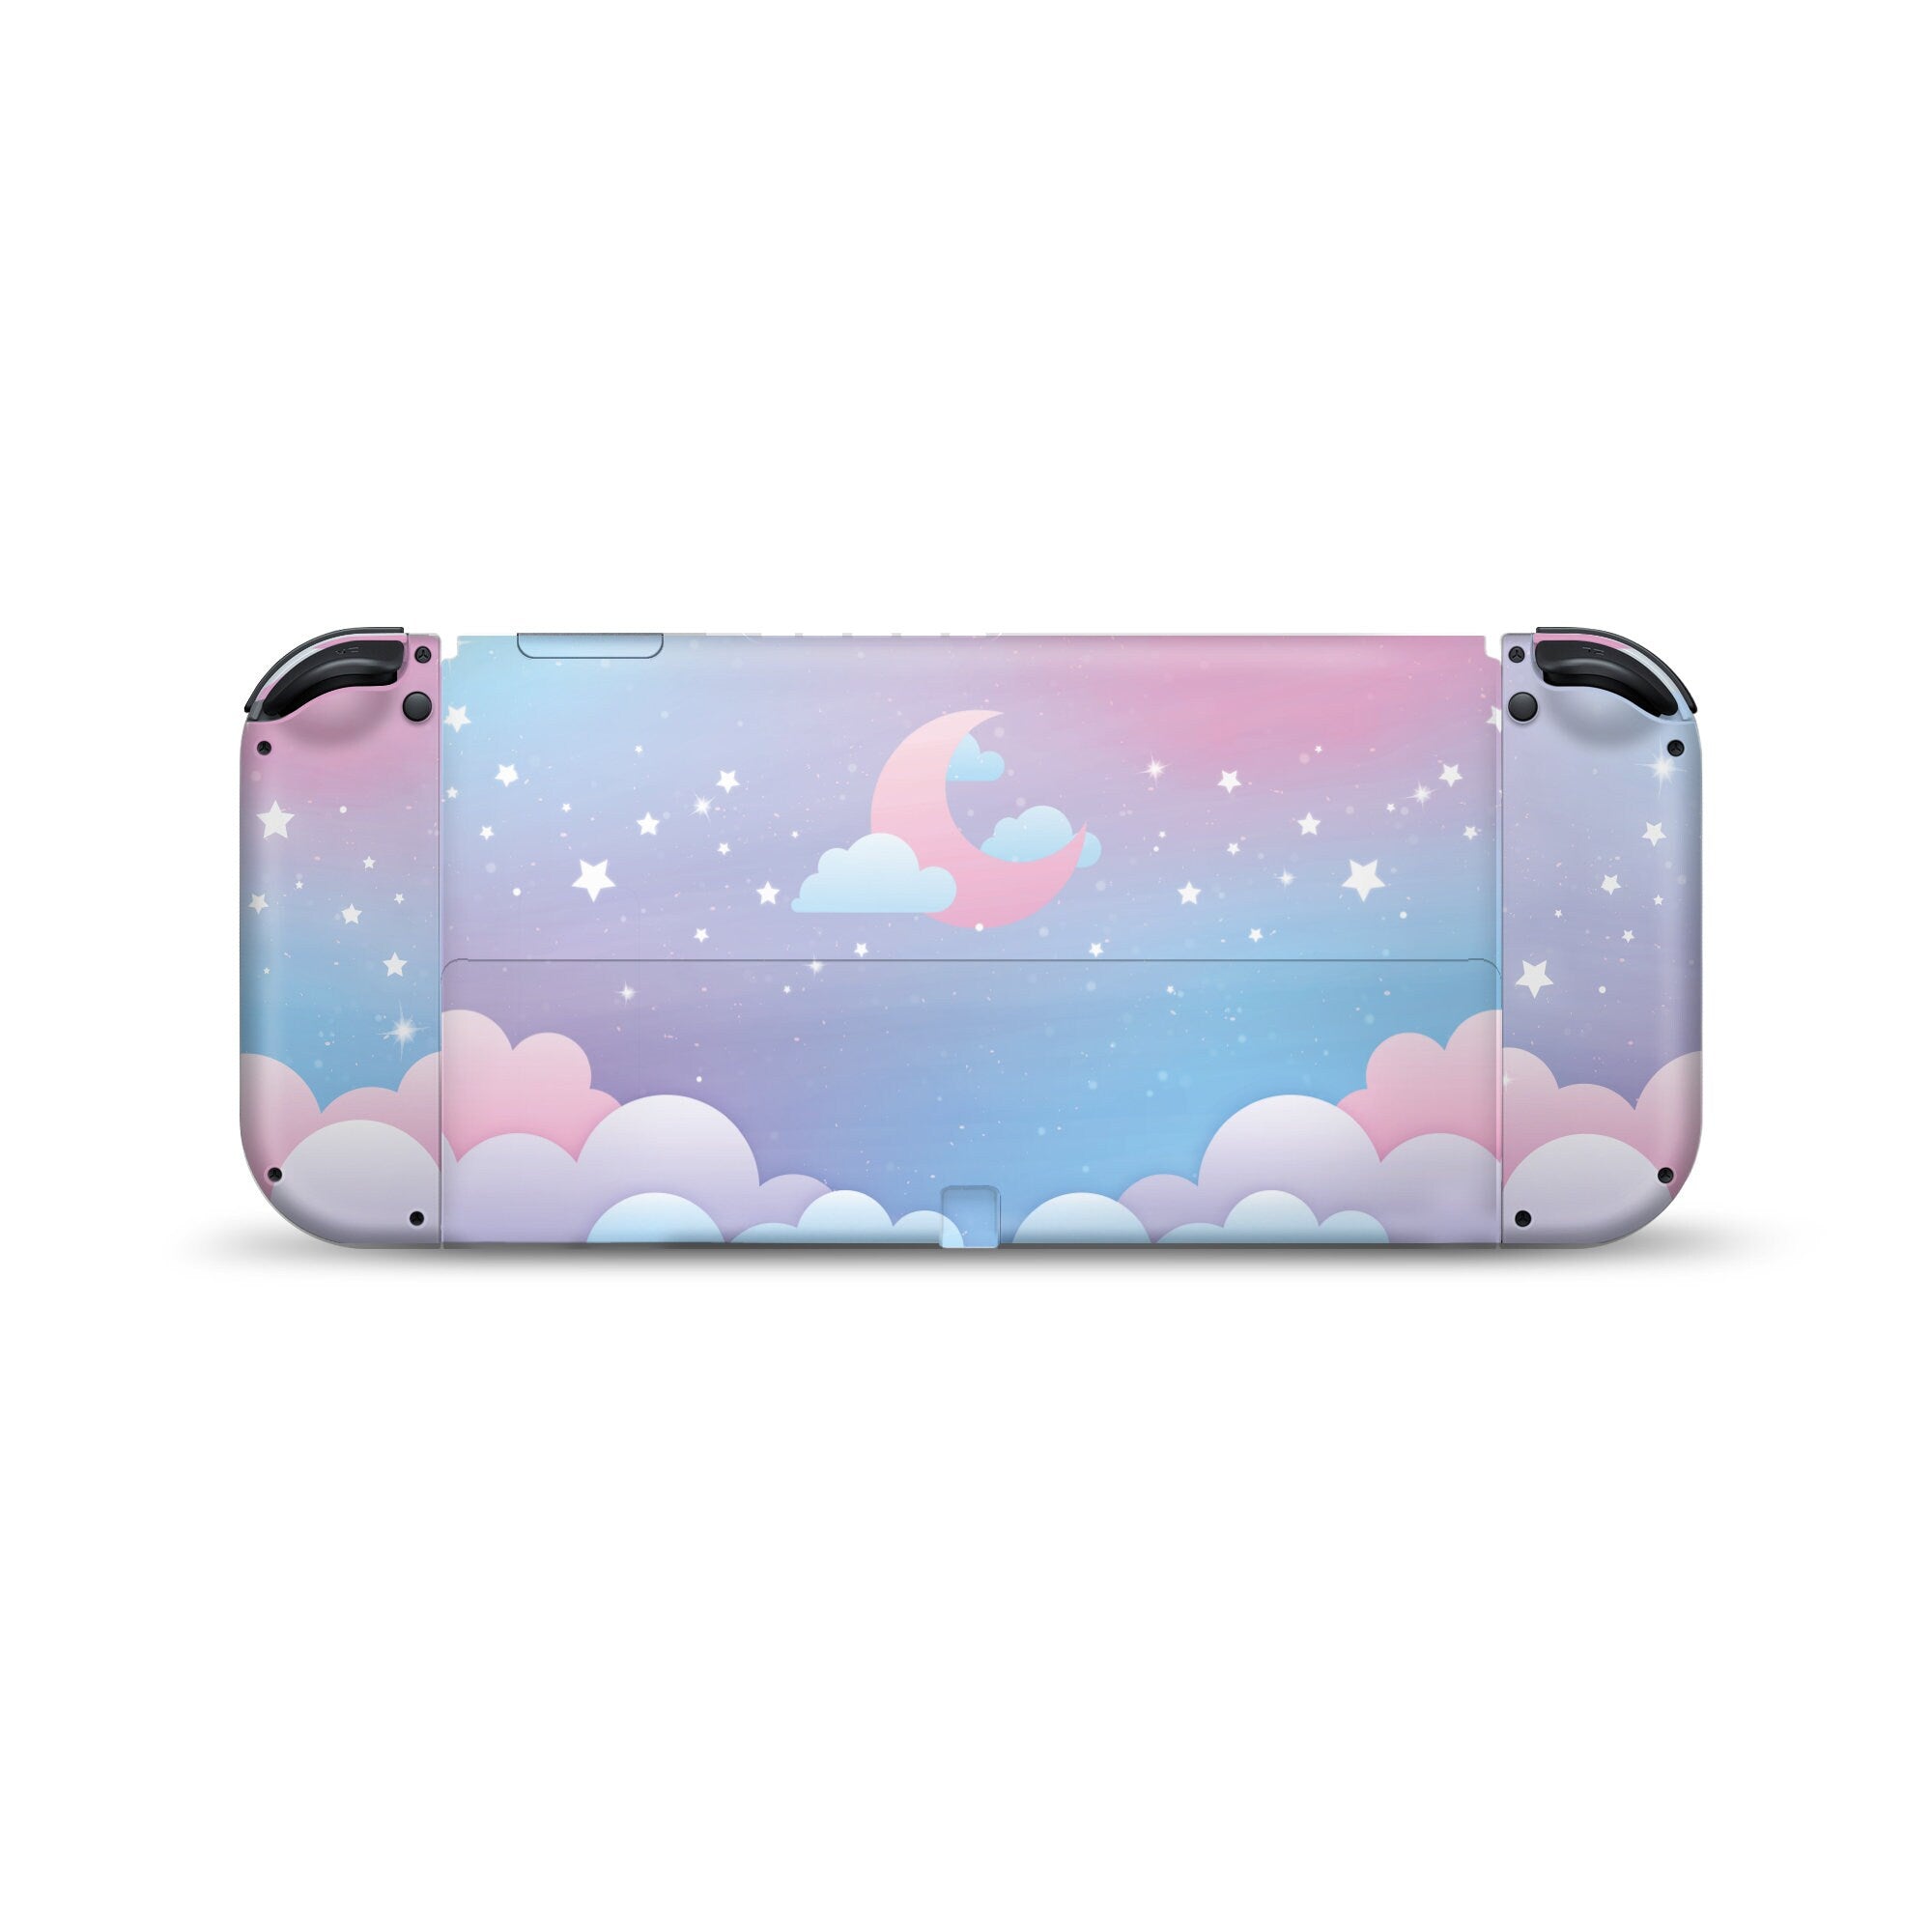 Cloud Nebula Nintendo Switch OLED Skin